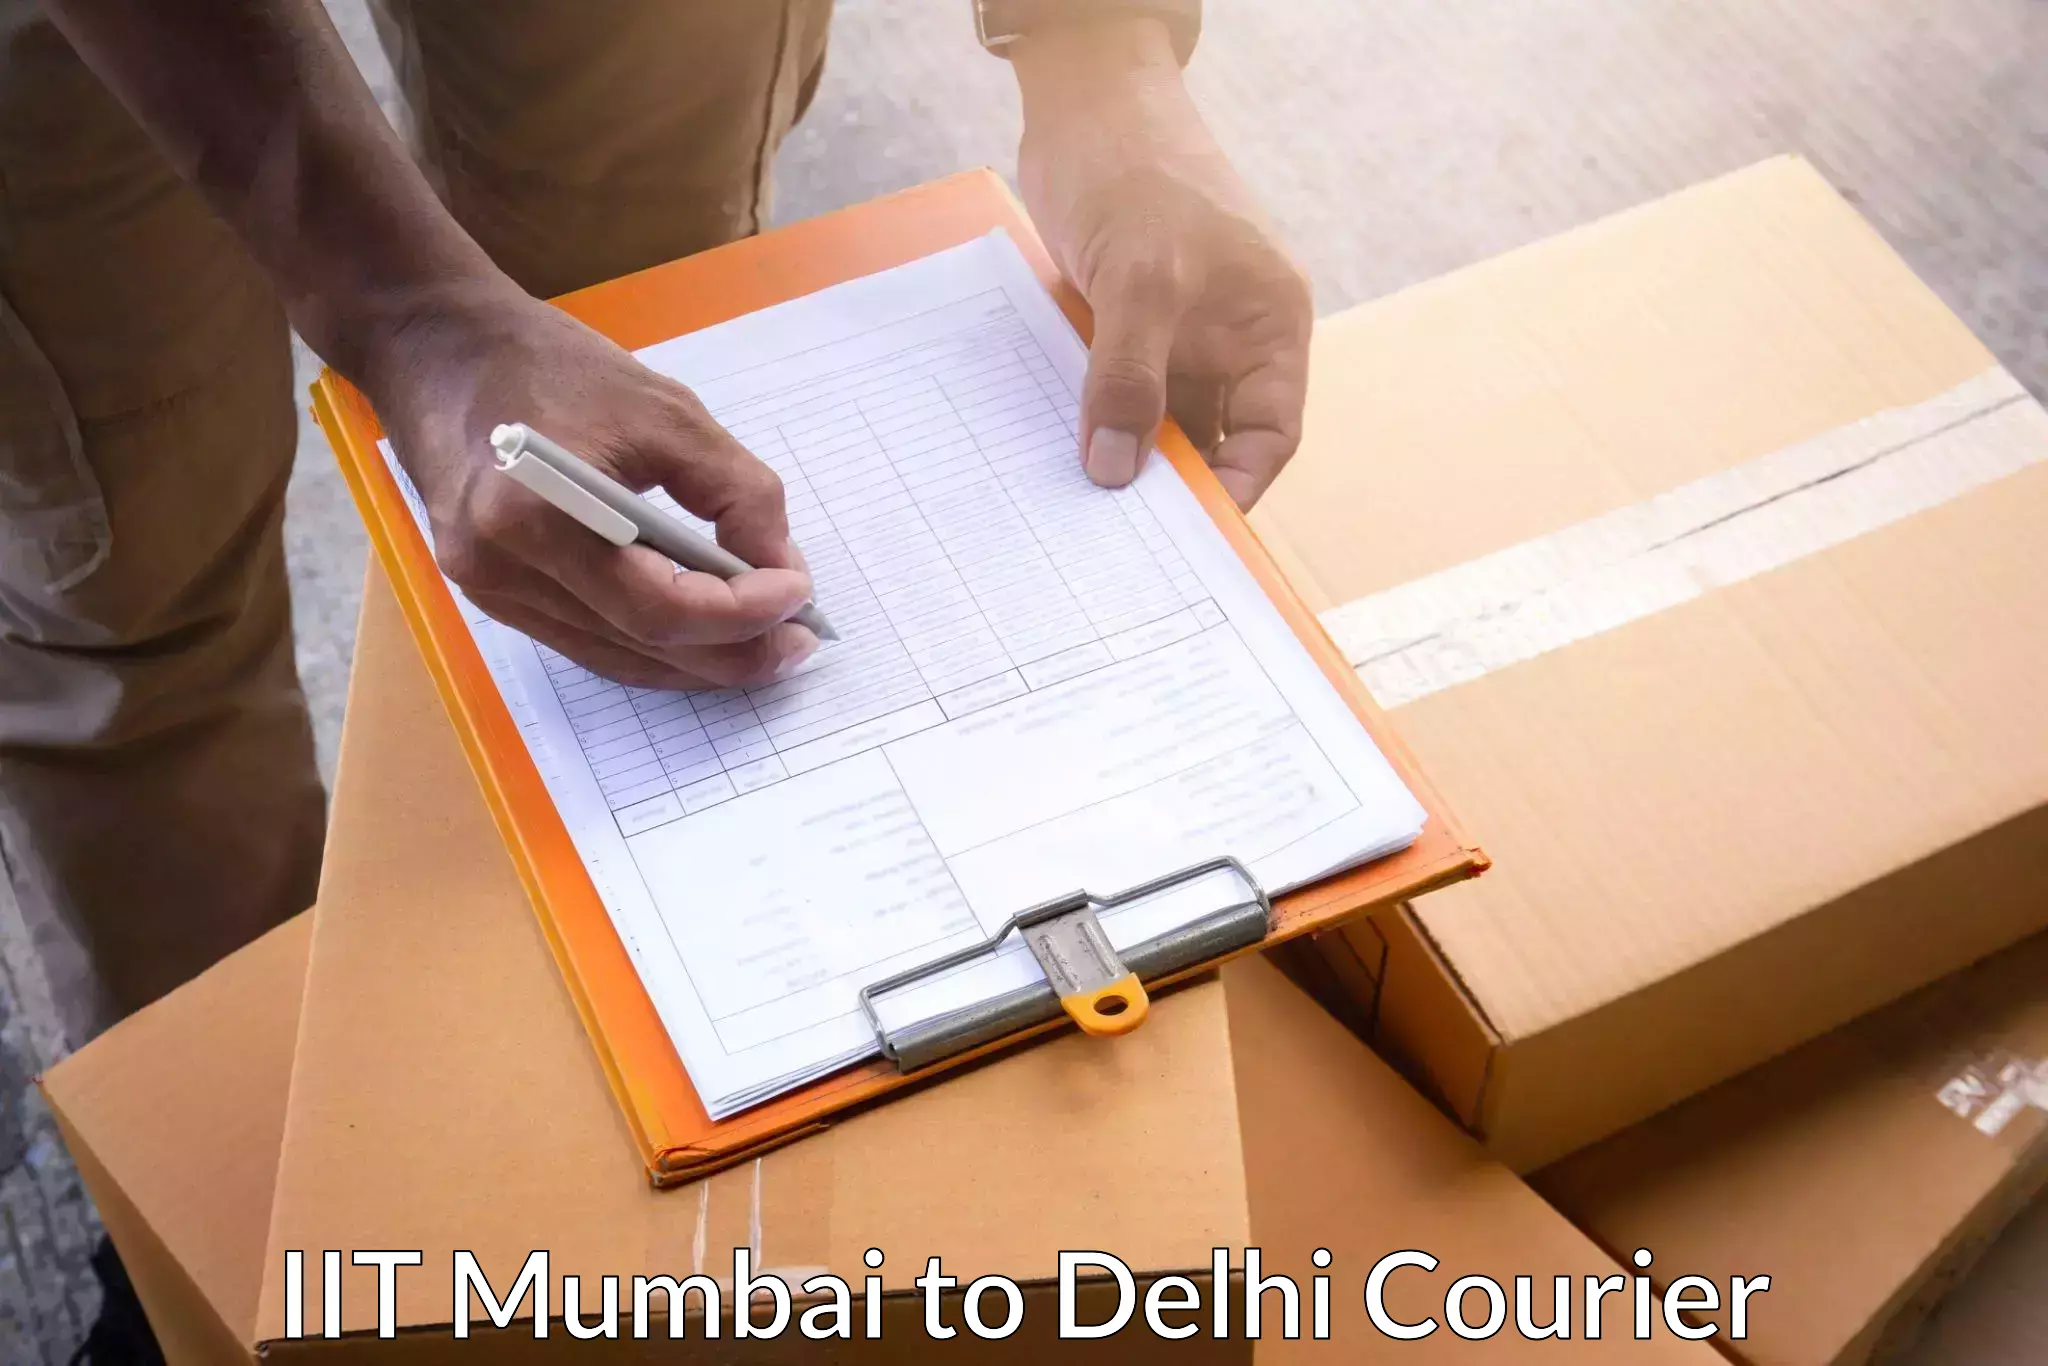 Global shipping solutions IIT Mumbai to Delhi